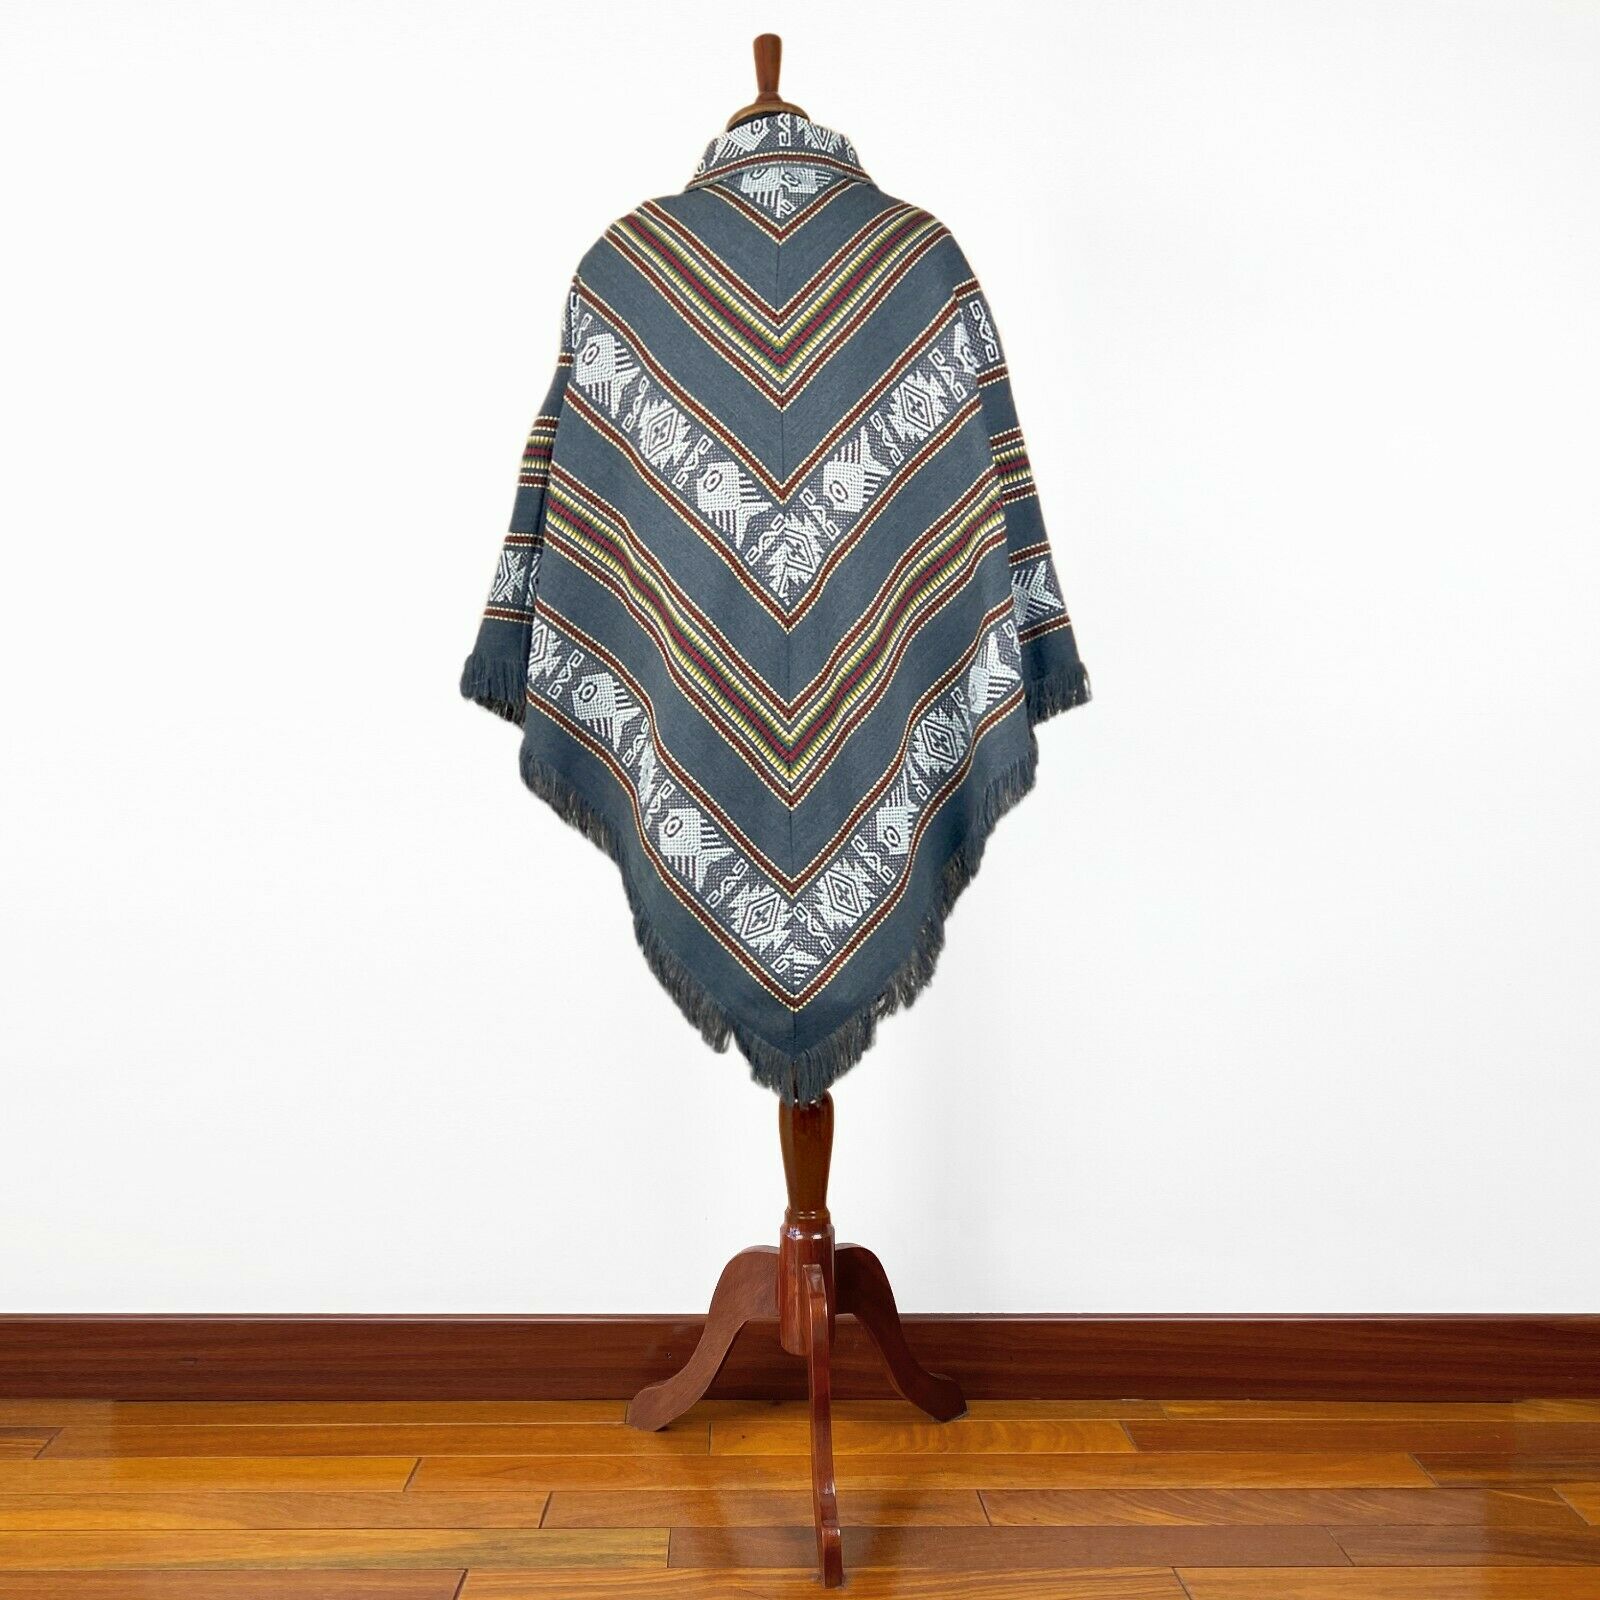 Bomboiza - Alpaca wool Serape Poncho with scarf - Piranha pattern - Gray - Unisex